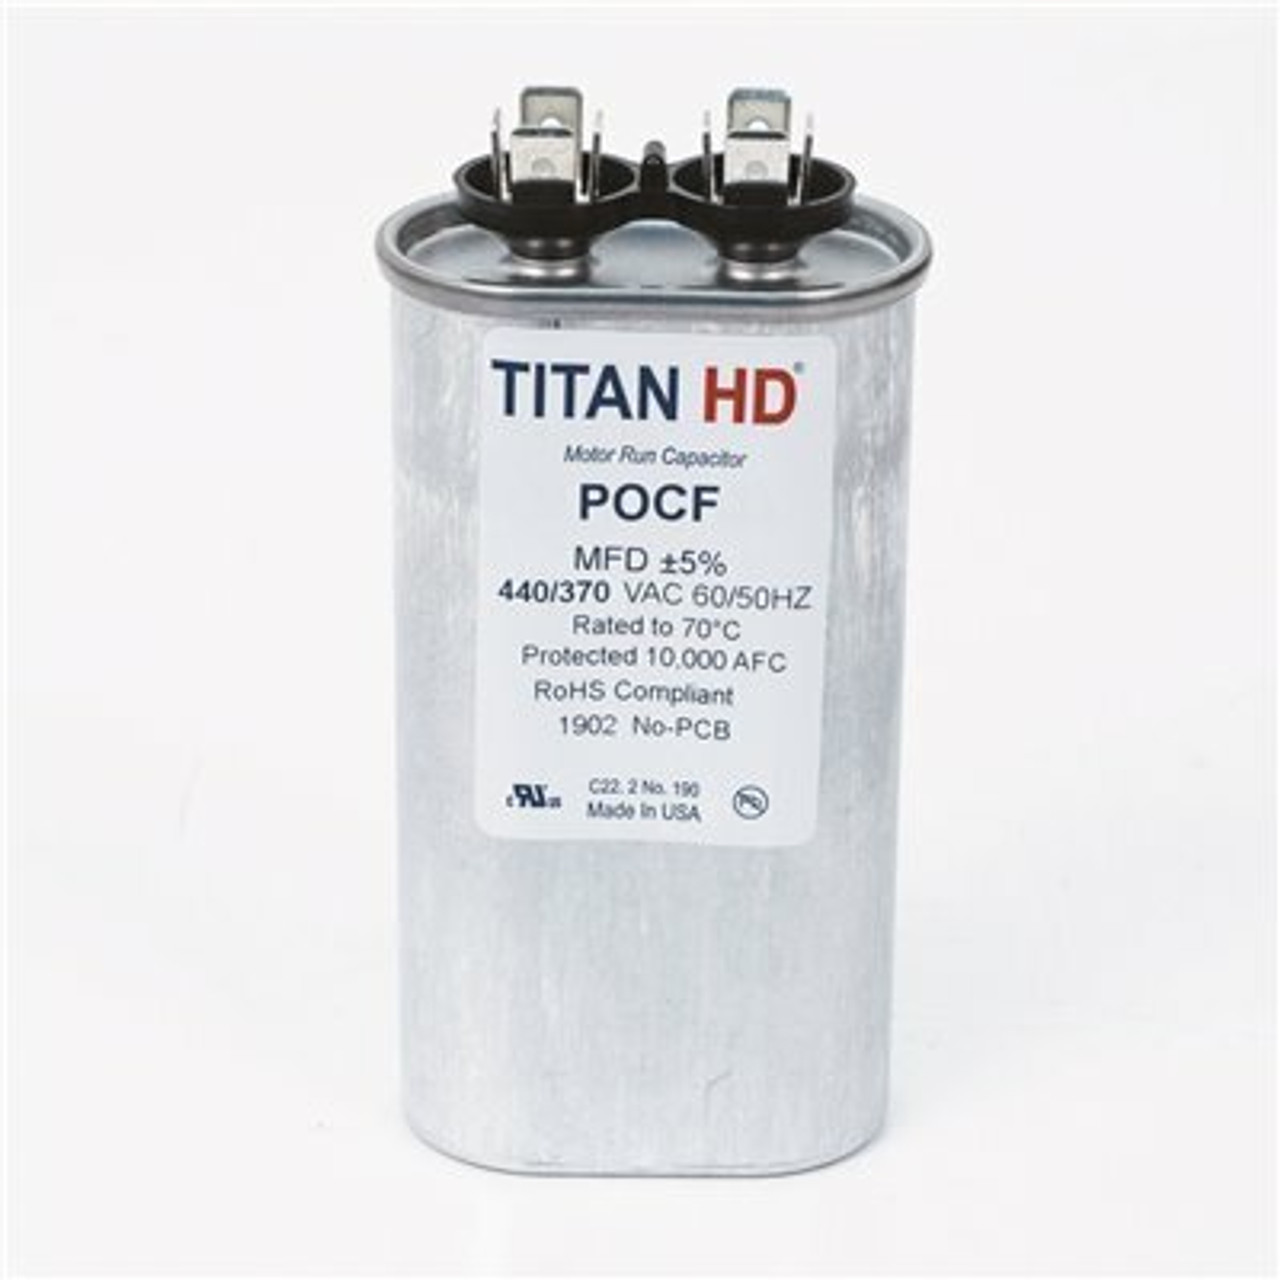 Titan Hd 35 Mfd 440/370-Volt Oval Run Capacitor